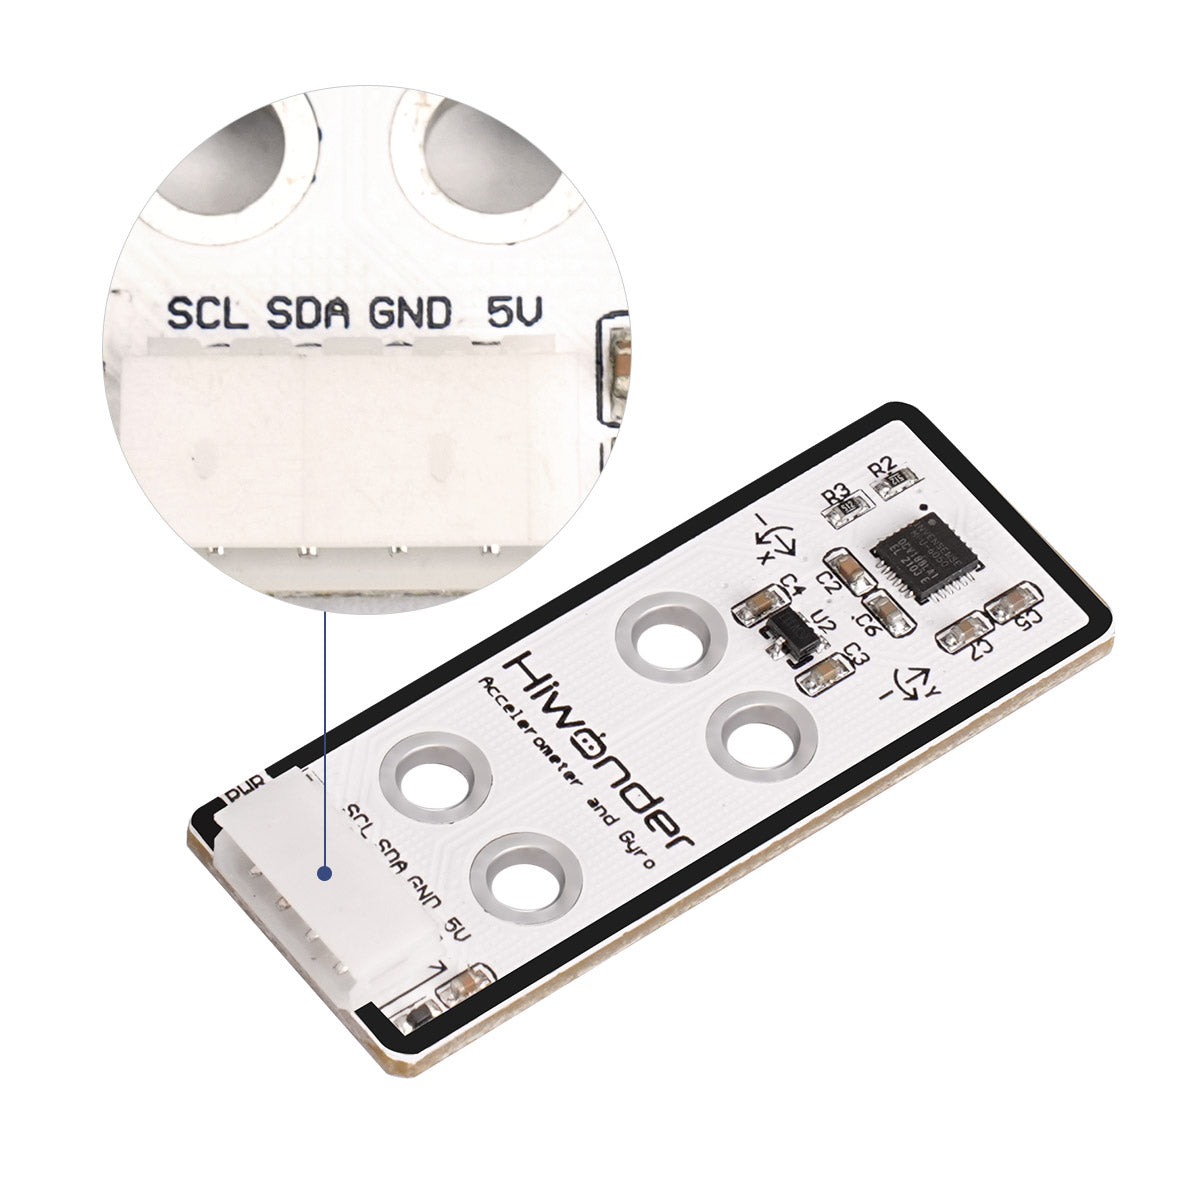 Acceleration Sensor: Hiwonder Robot Sensor Compatible with Arduino